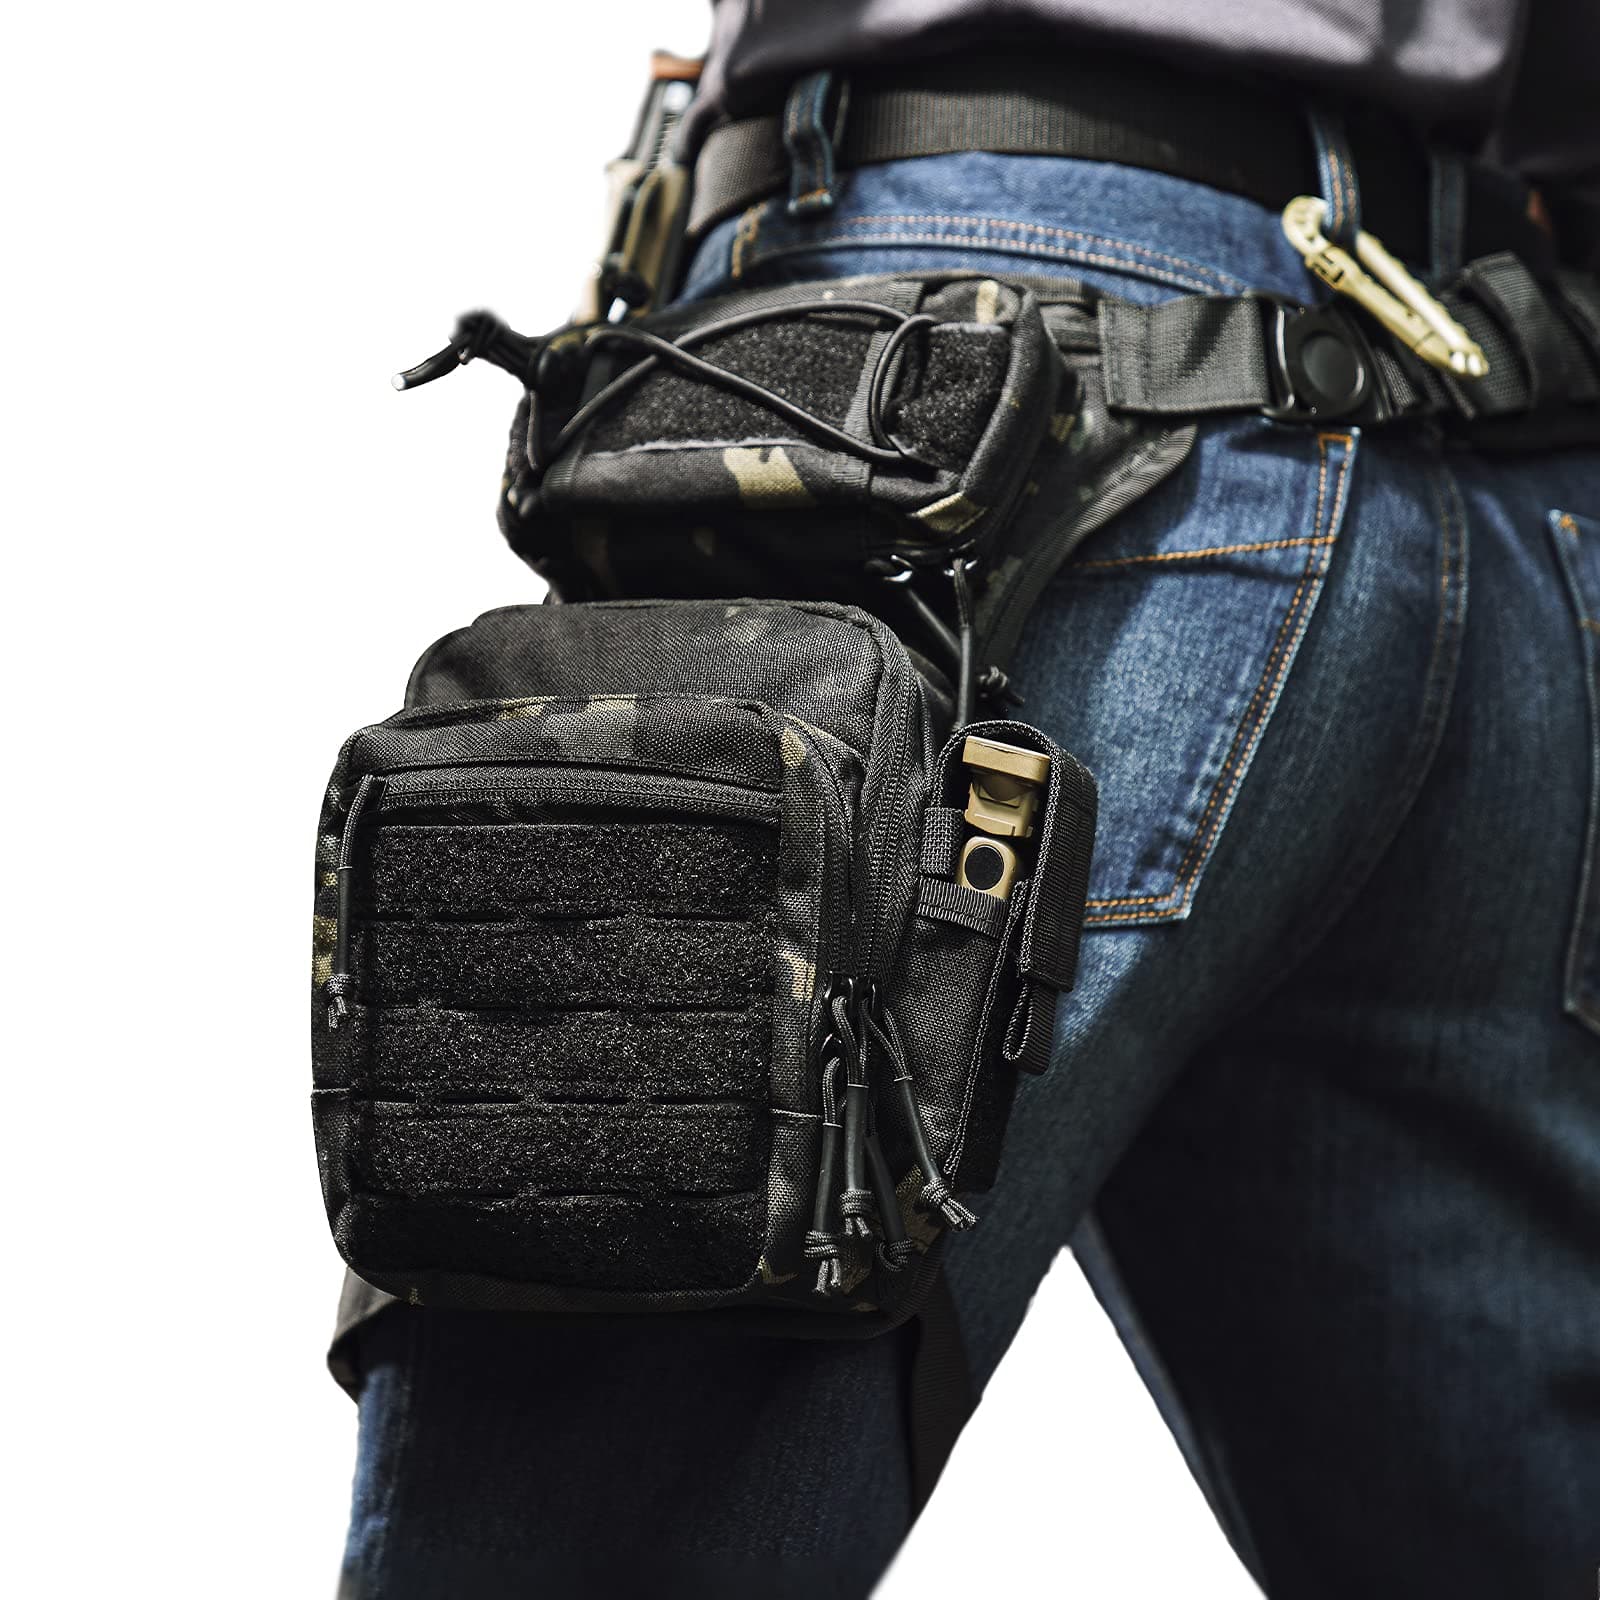 Drop Leg Bag for Men Military Pack Pouch ANTARCTICA